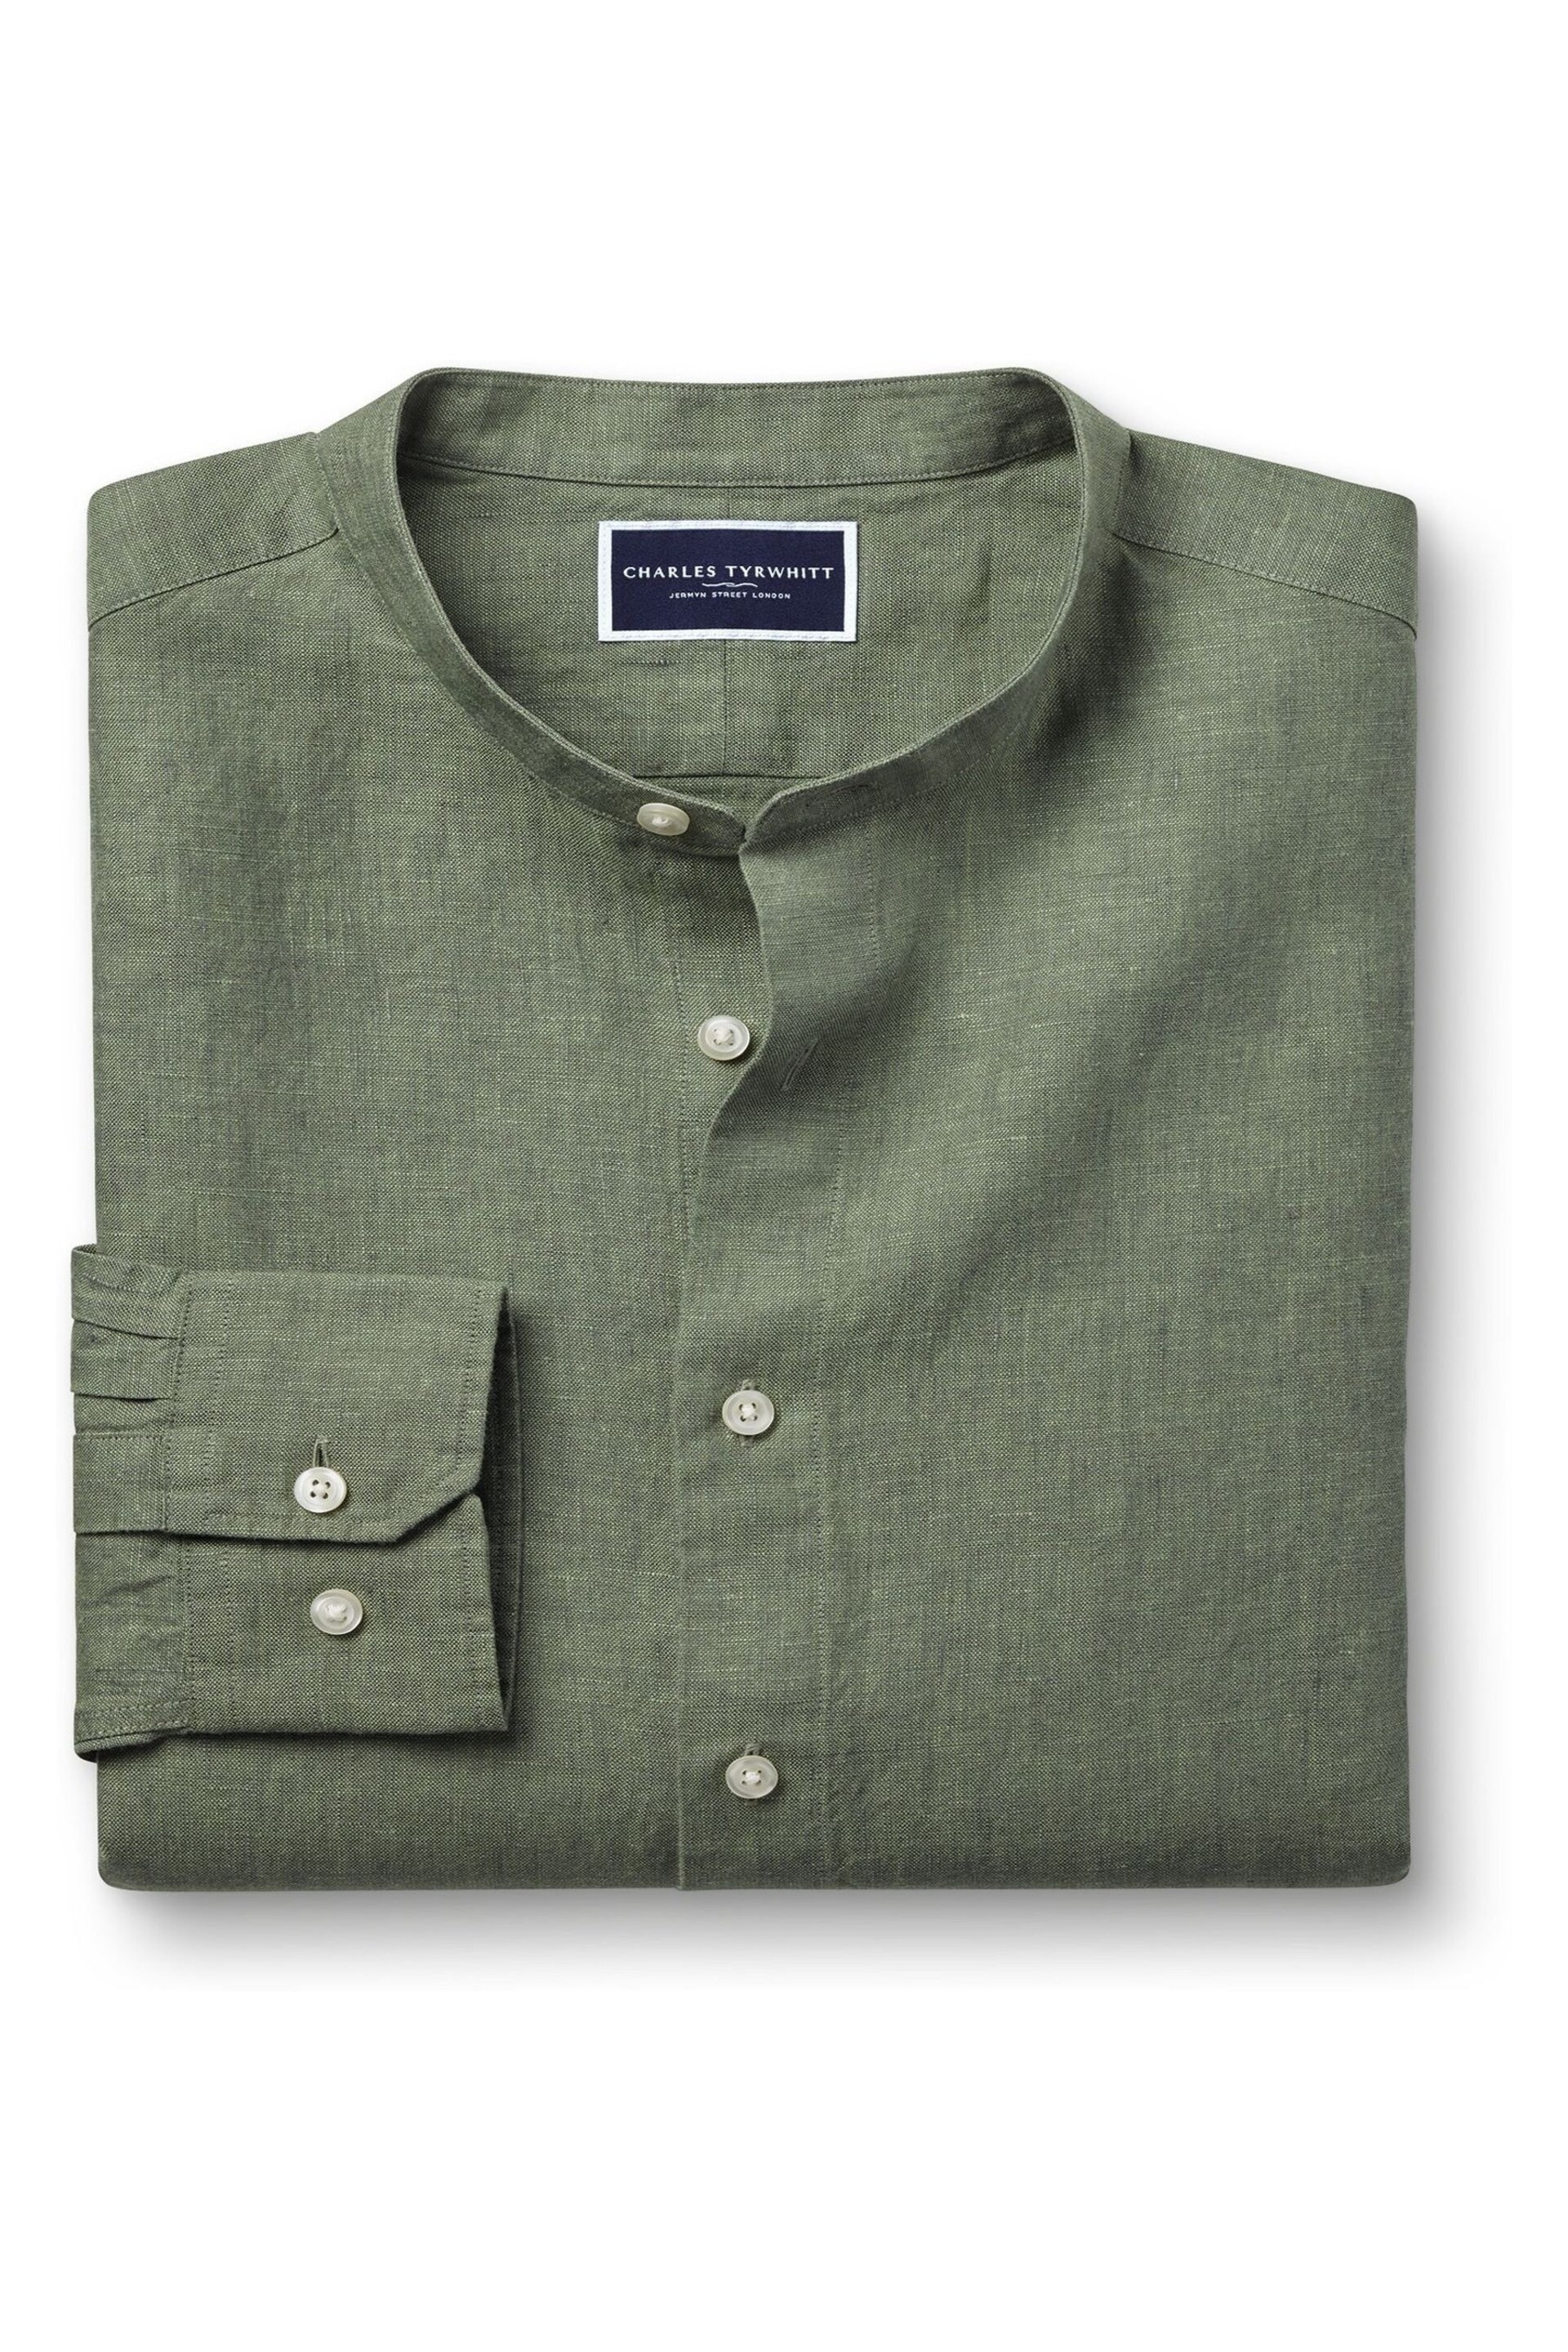 Charles Tyrwhitt Green Plain Slim Fit Pure Linen Collarless Shirt - Image 5 of 7